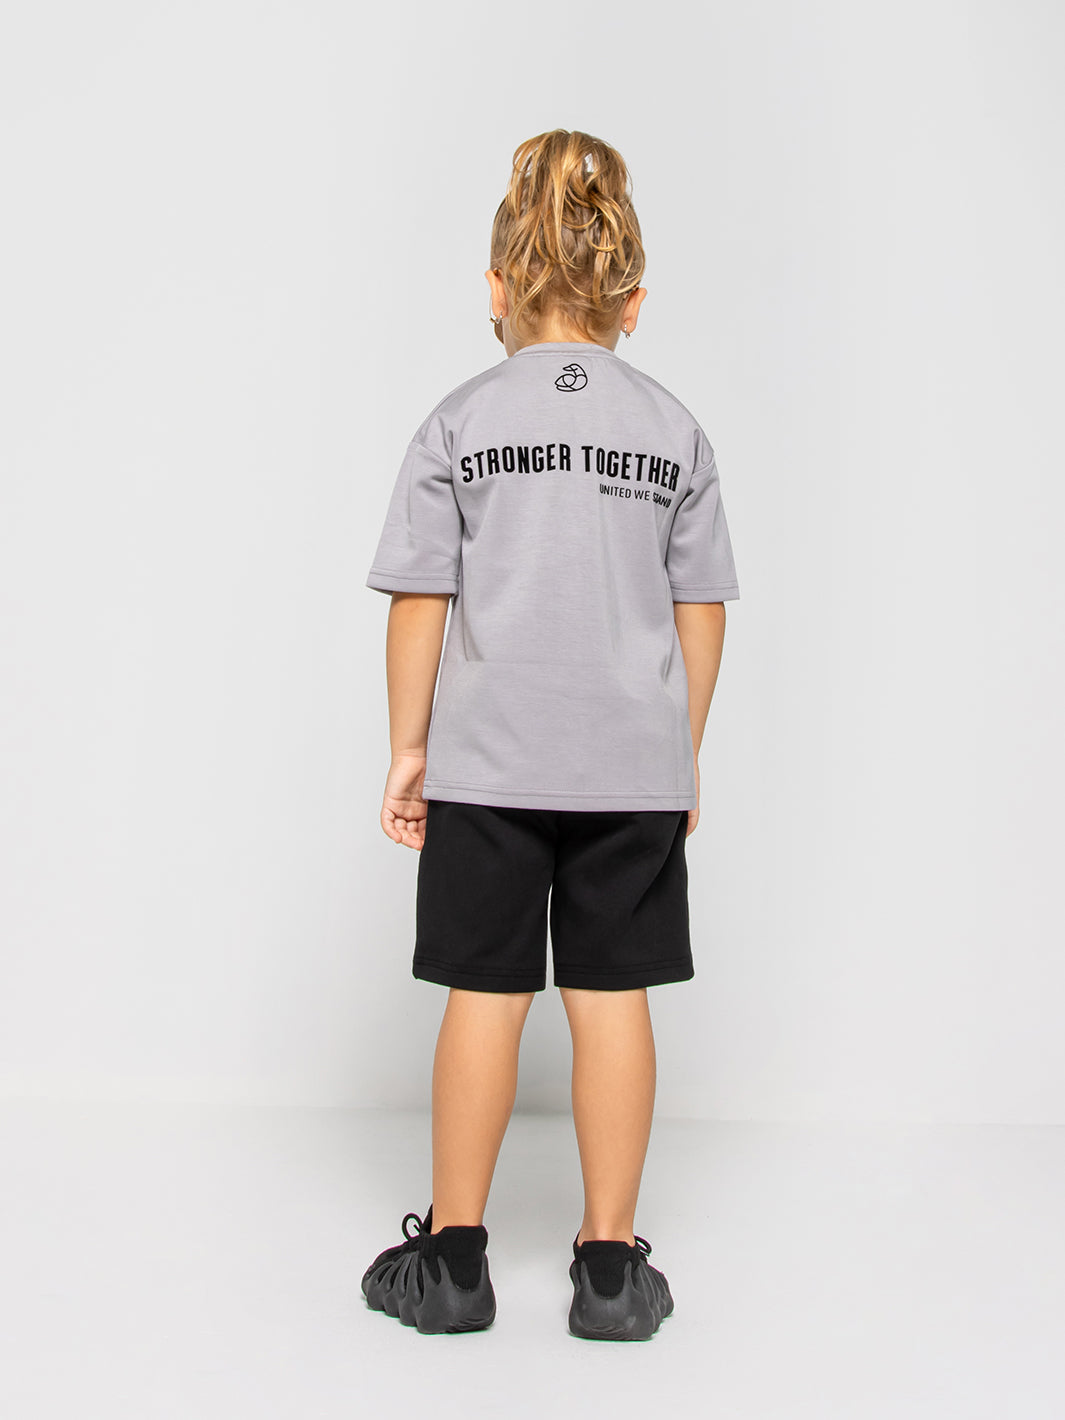 Kids Oversized Light Breathable T-Shirt - Stronger Together